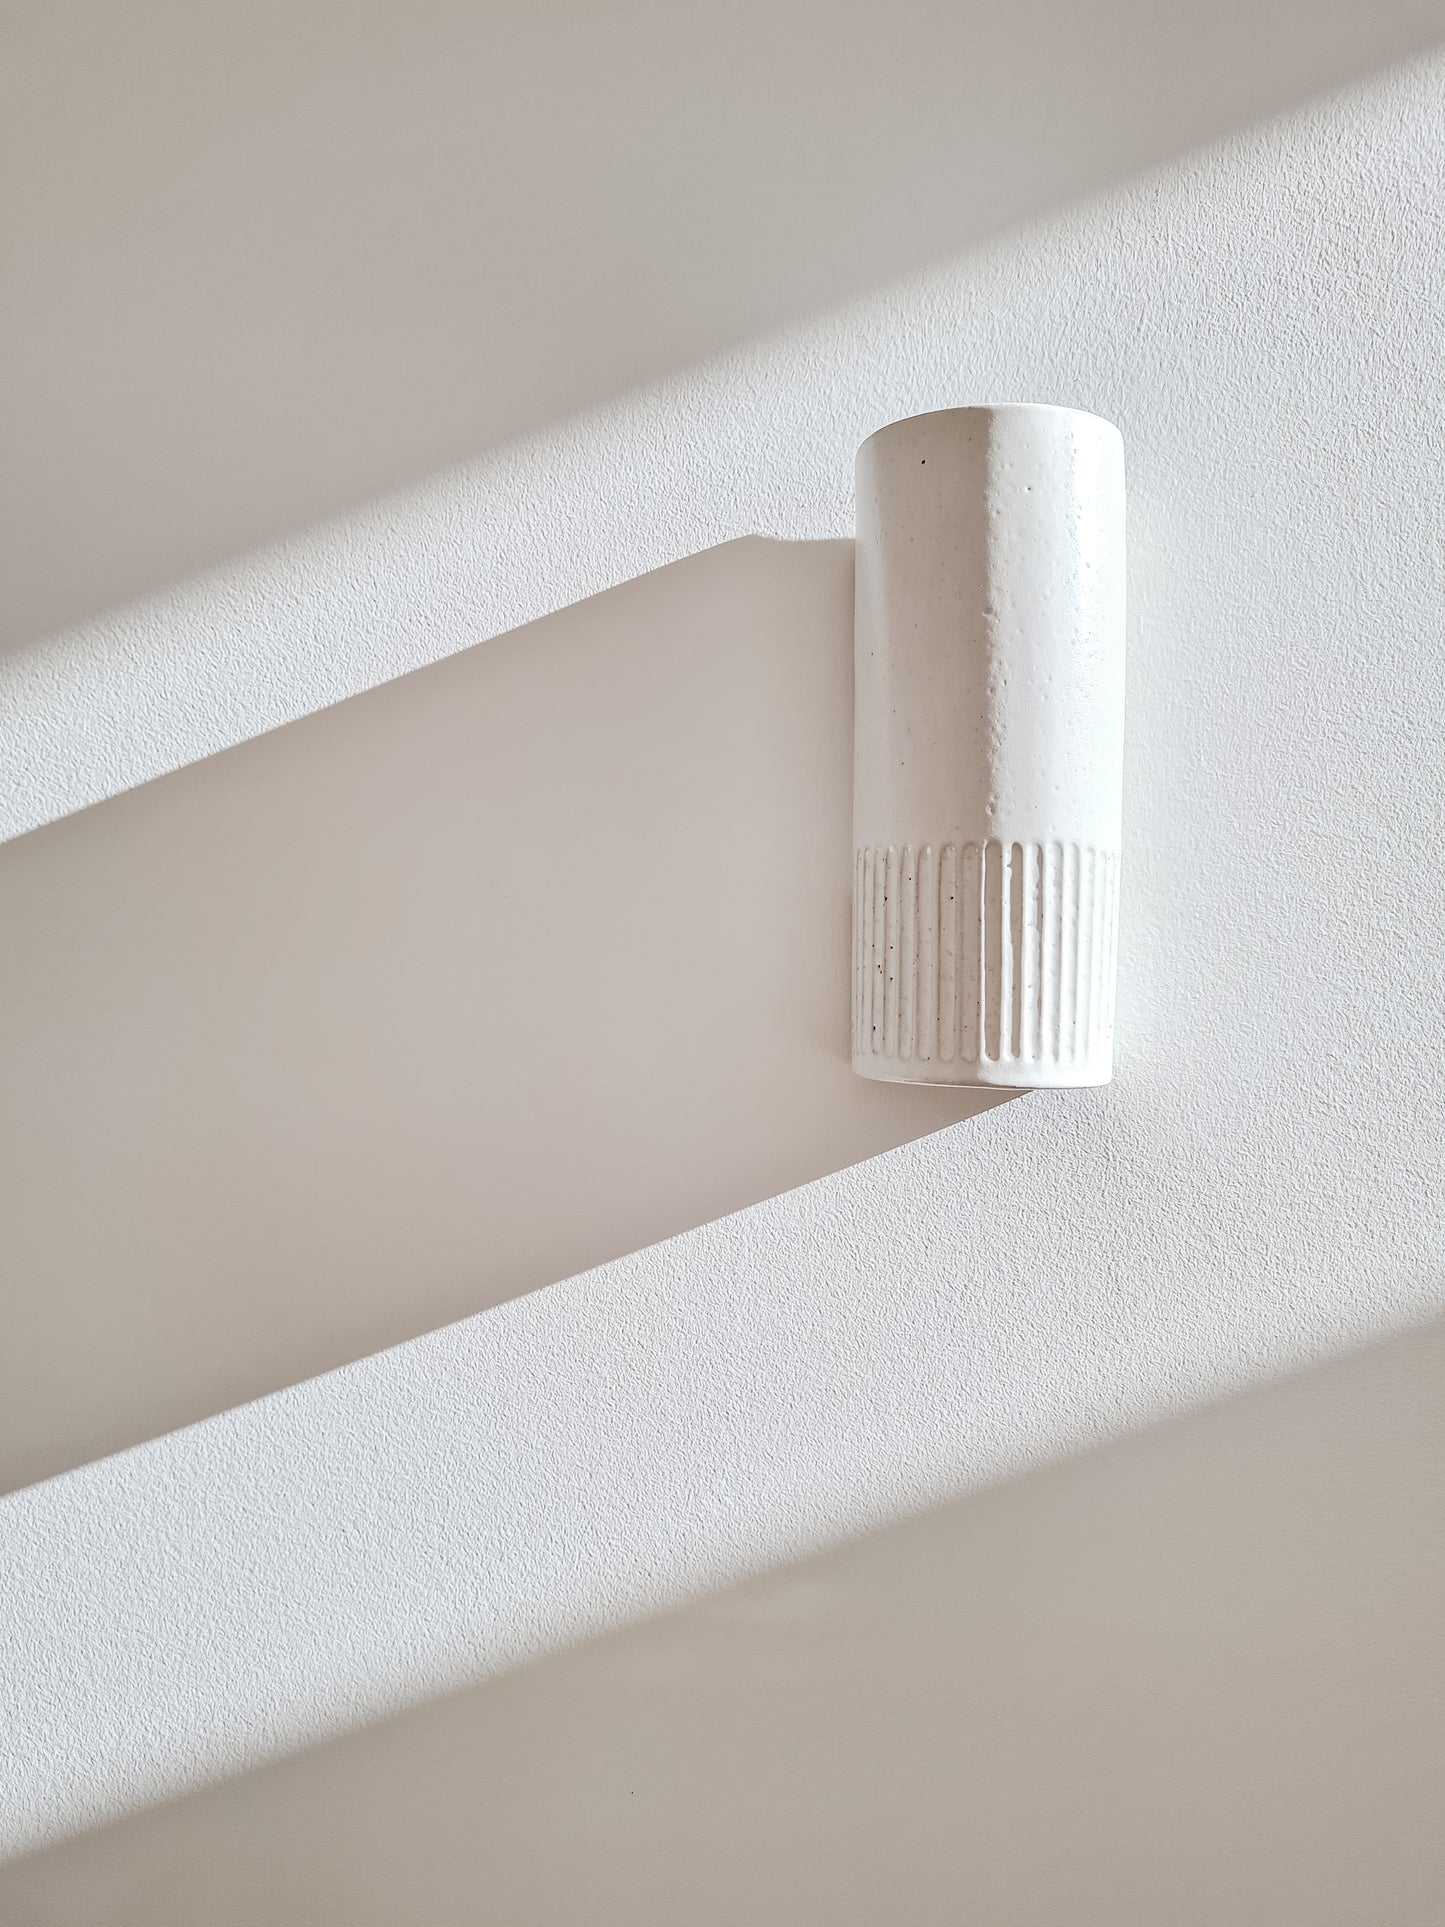 We Ponder | Tall or Short Day Interior Ceramic Wall Light